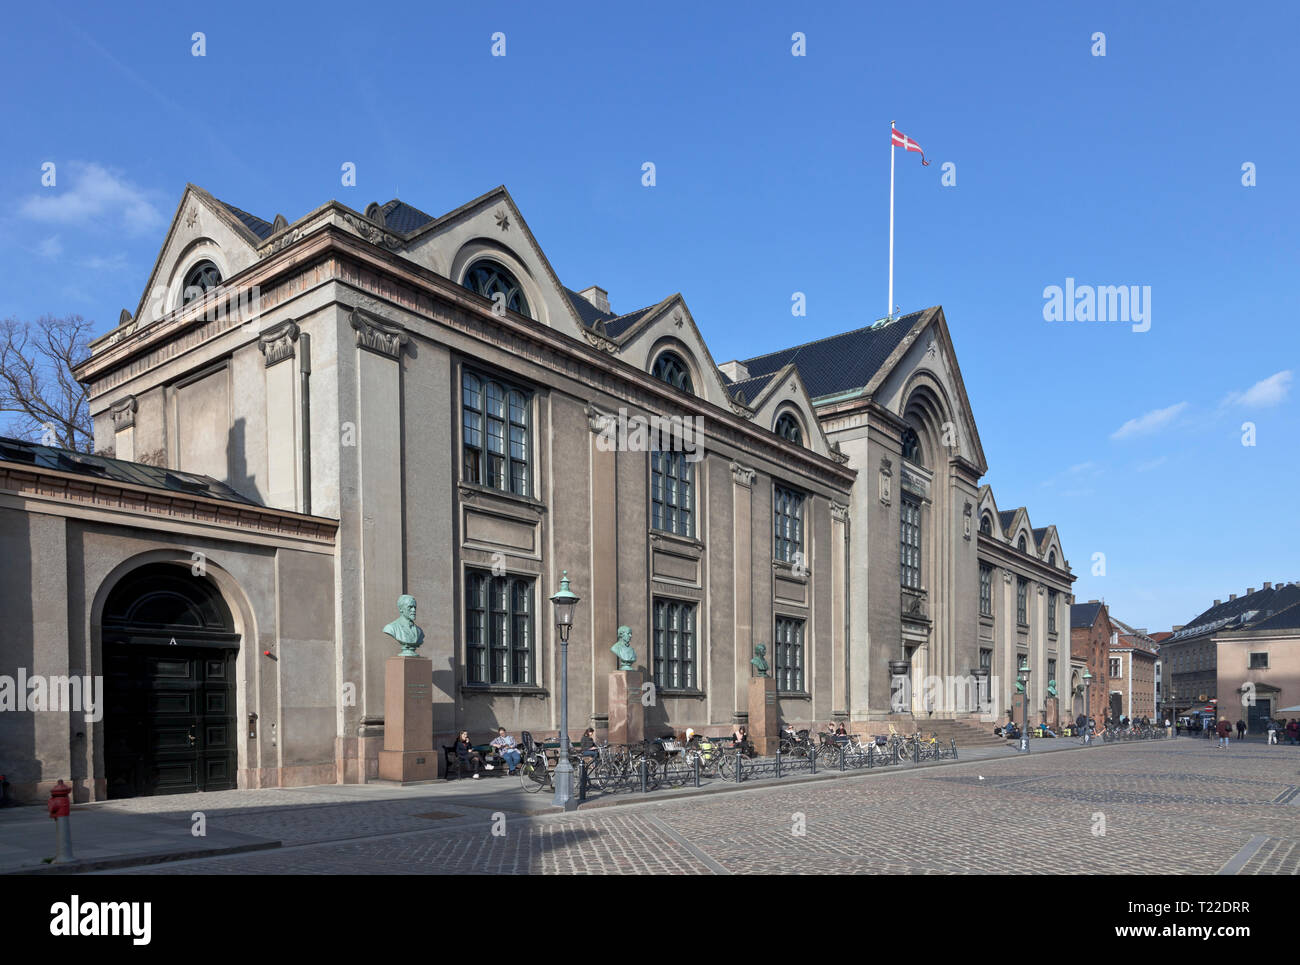 The main building of Copenhagen University at Nørregade / Vor Frue Plads in central Copenhagen, Denmark. Busts of 6 famous scientists in front. Stock Photo